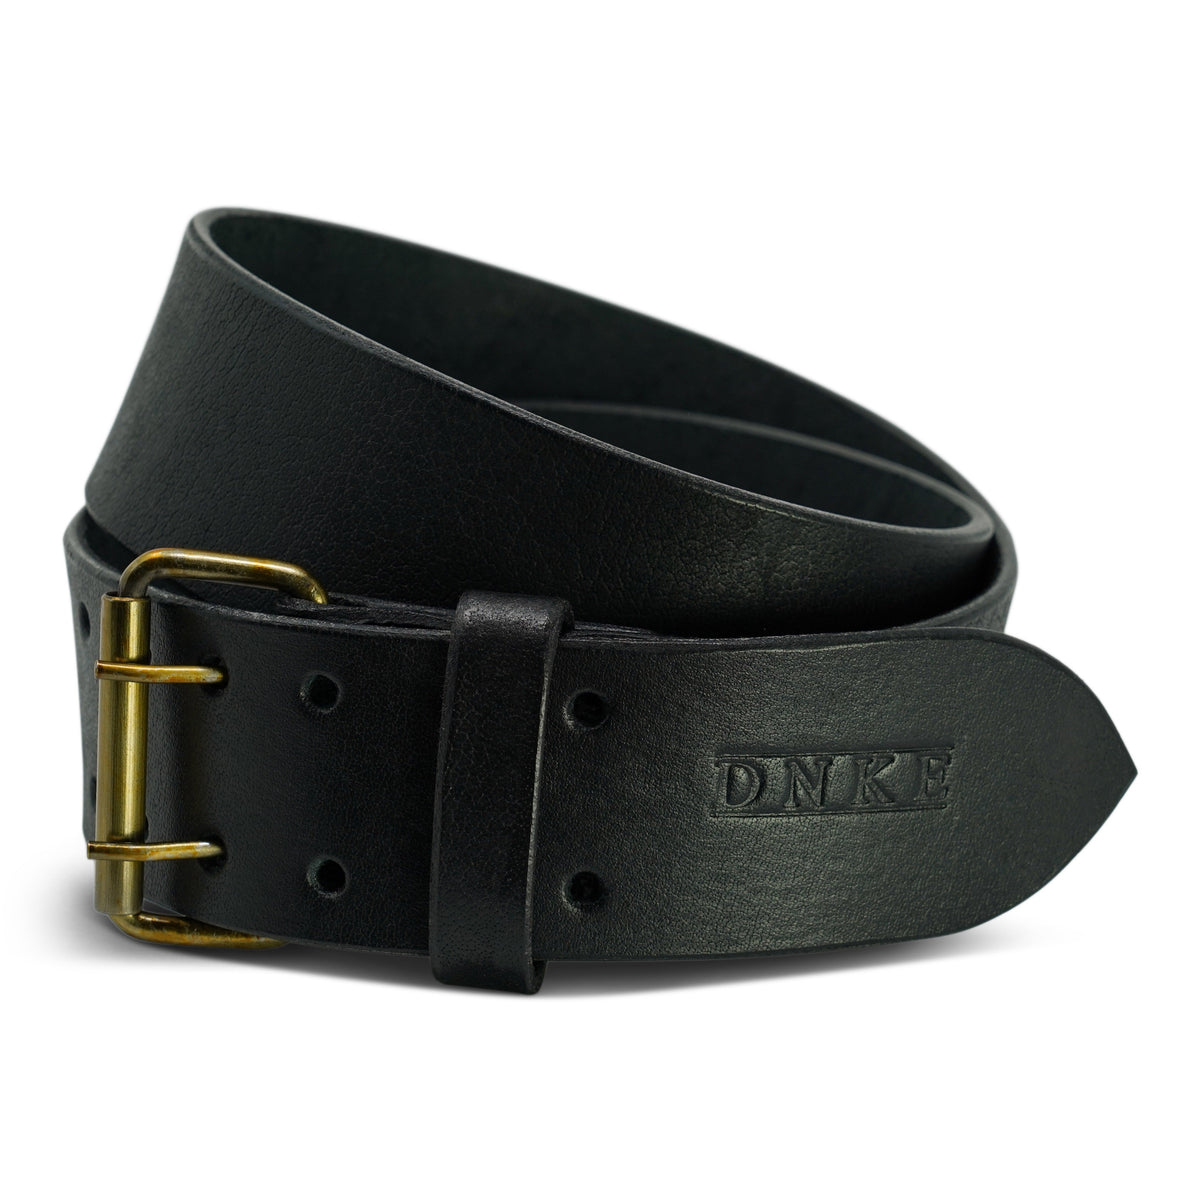 Double Prong Kilt Belt - Black Leather Cover